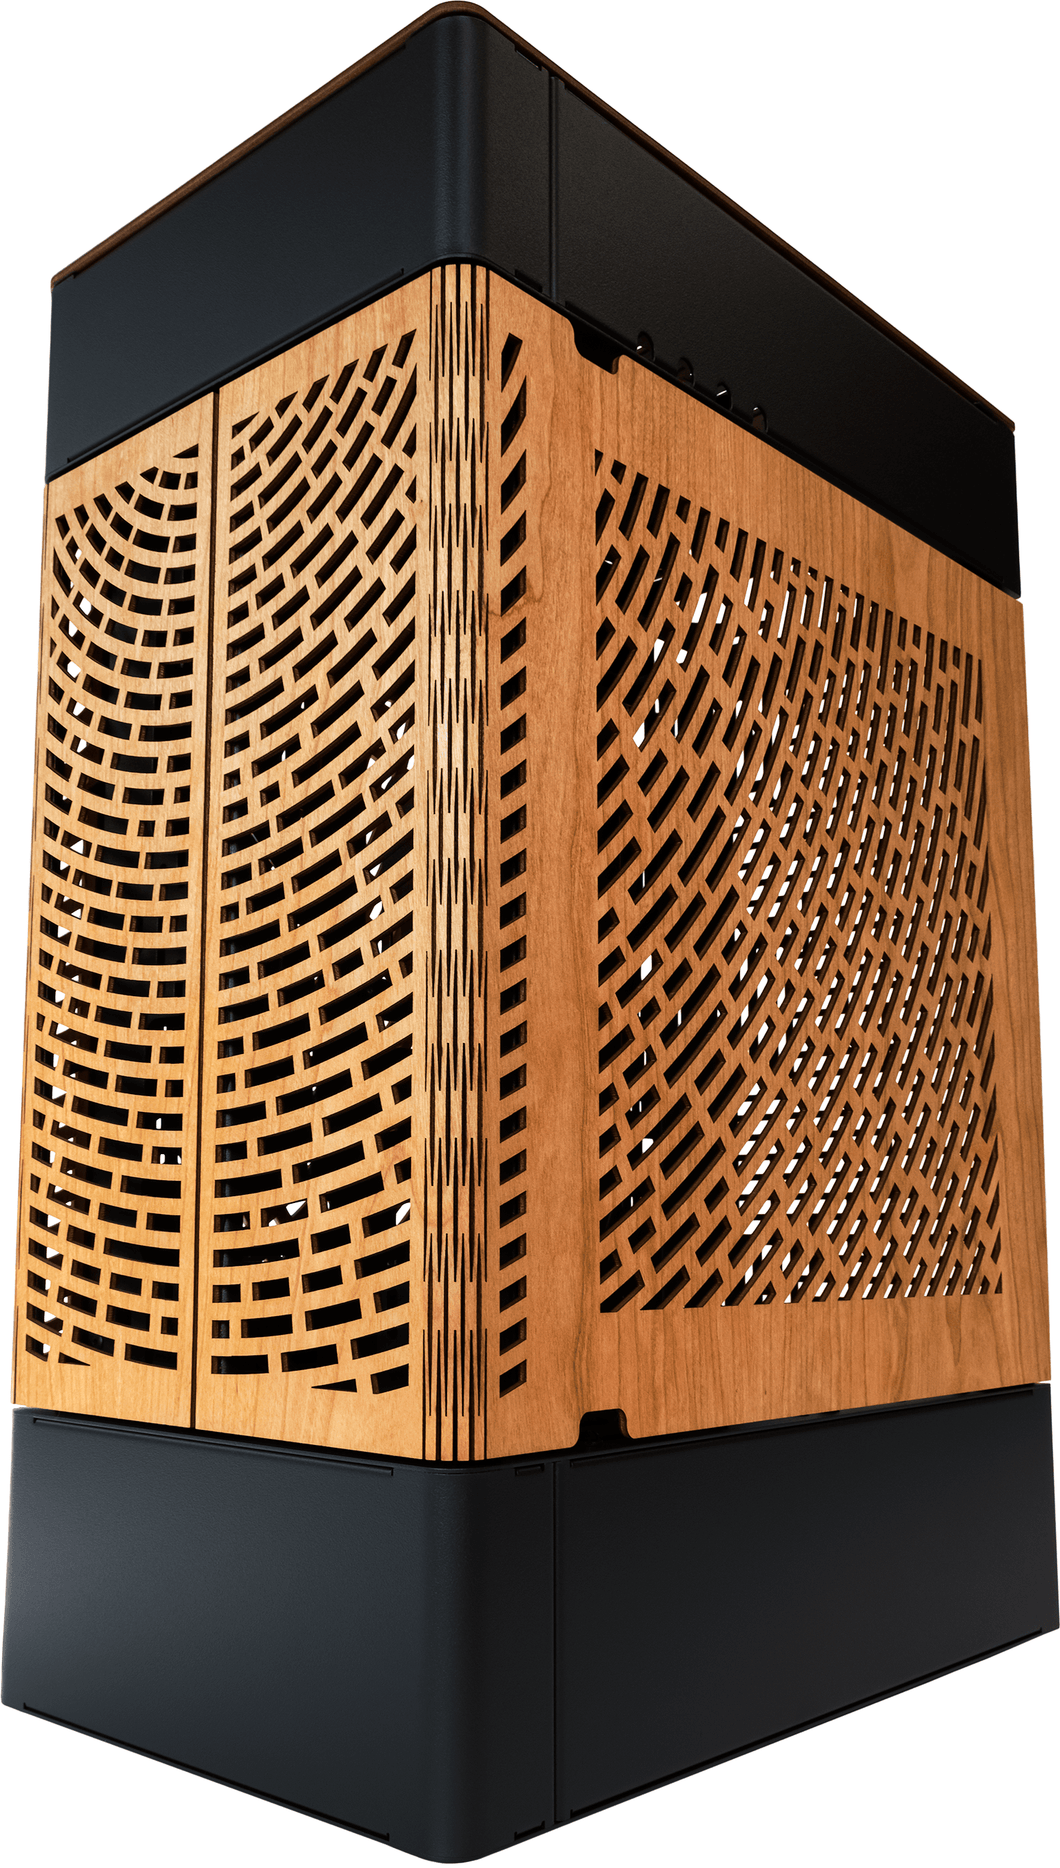 Kanto Mesh mATX V1.3 - High-performance wooden PC case